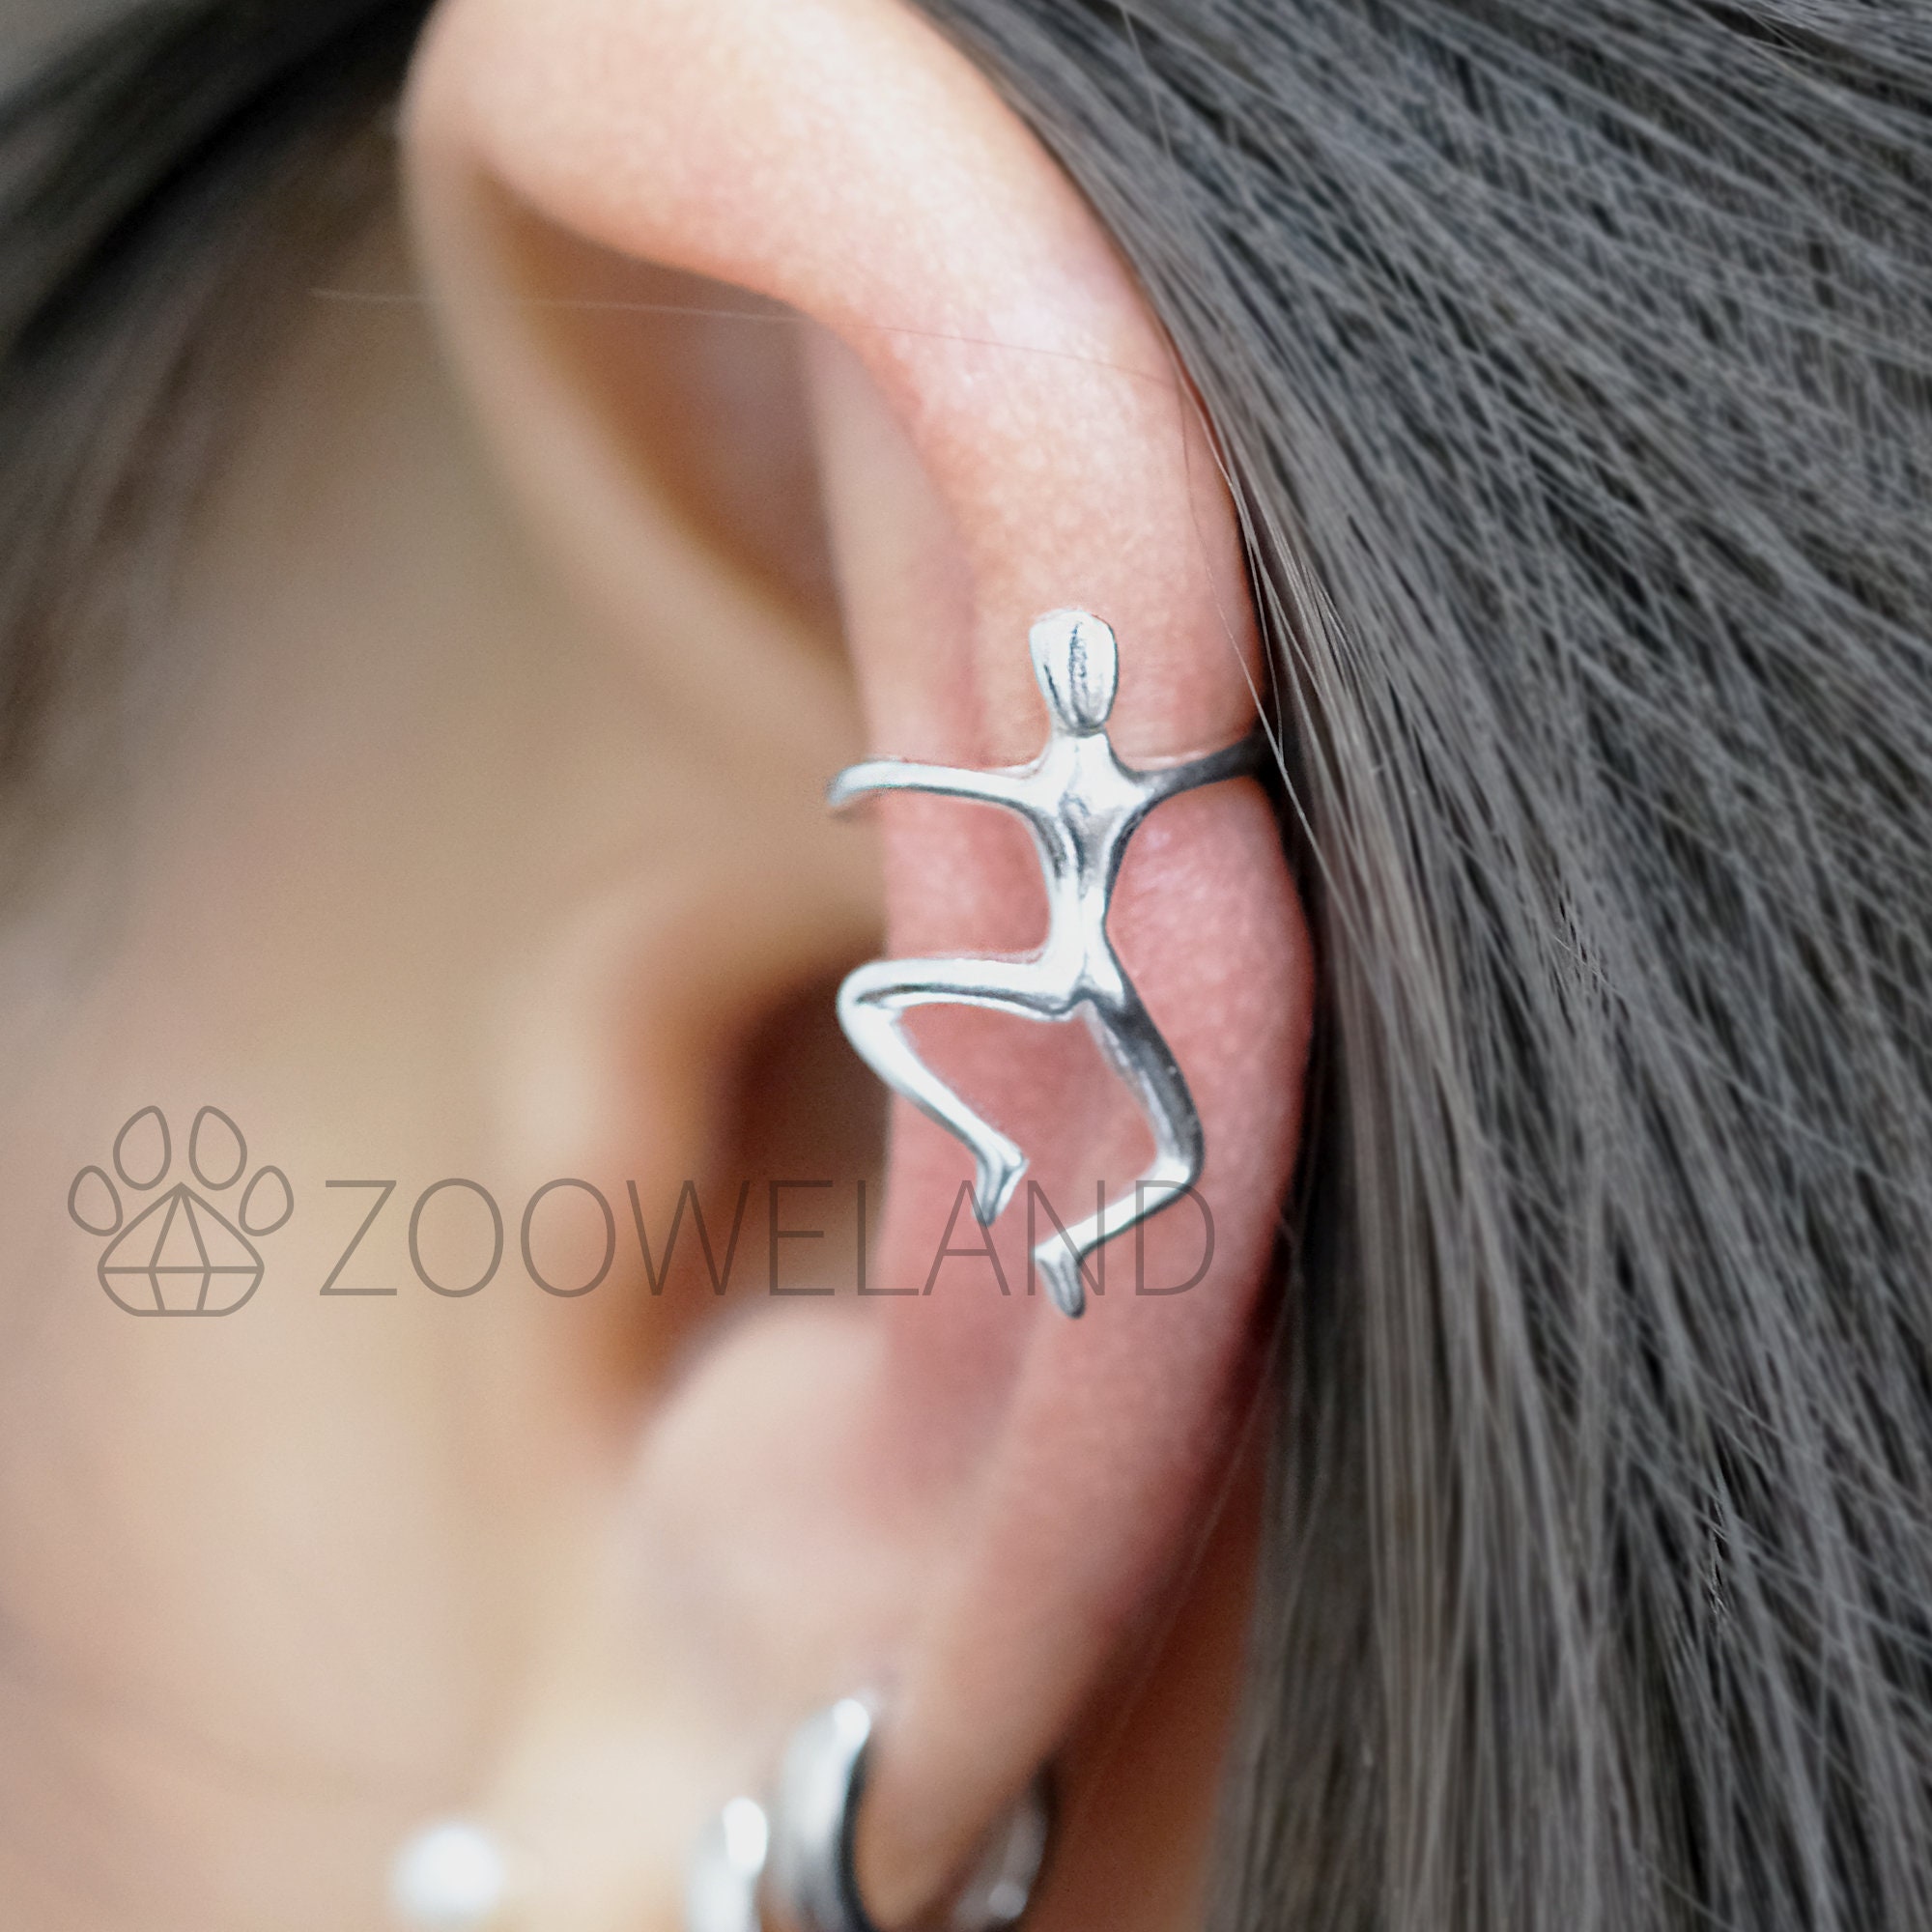 Iaceble Punk Climbing Man Ear Cuff Earrings Silver Man Cuff Wrap Earrings  Tiny Human Cartilage Clip Earrings No Piercing Cuff Clip Earring Jewelry  for